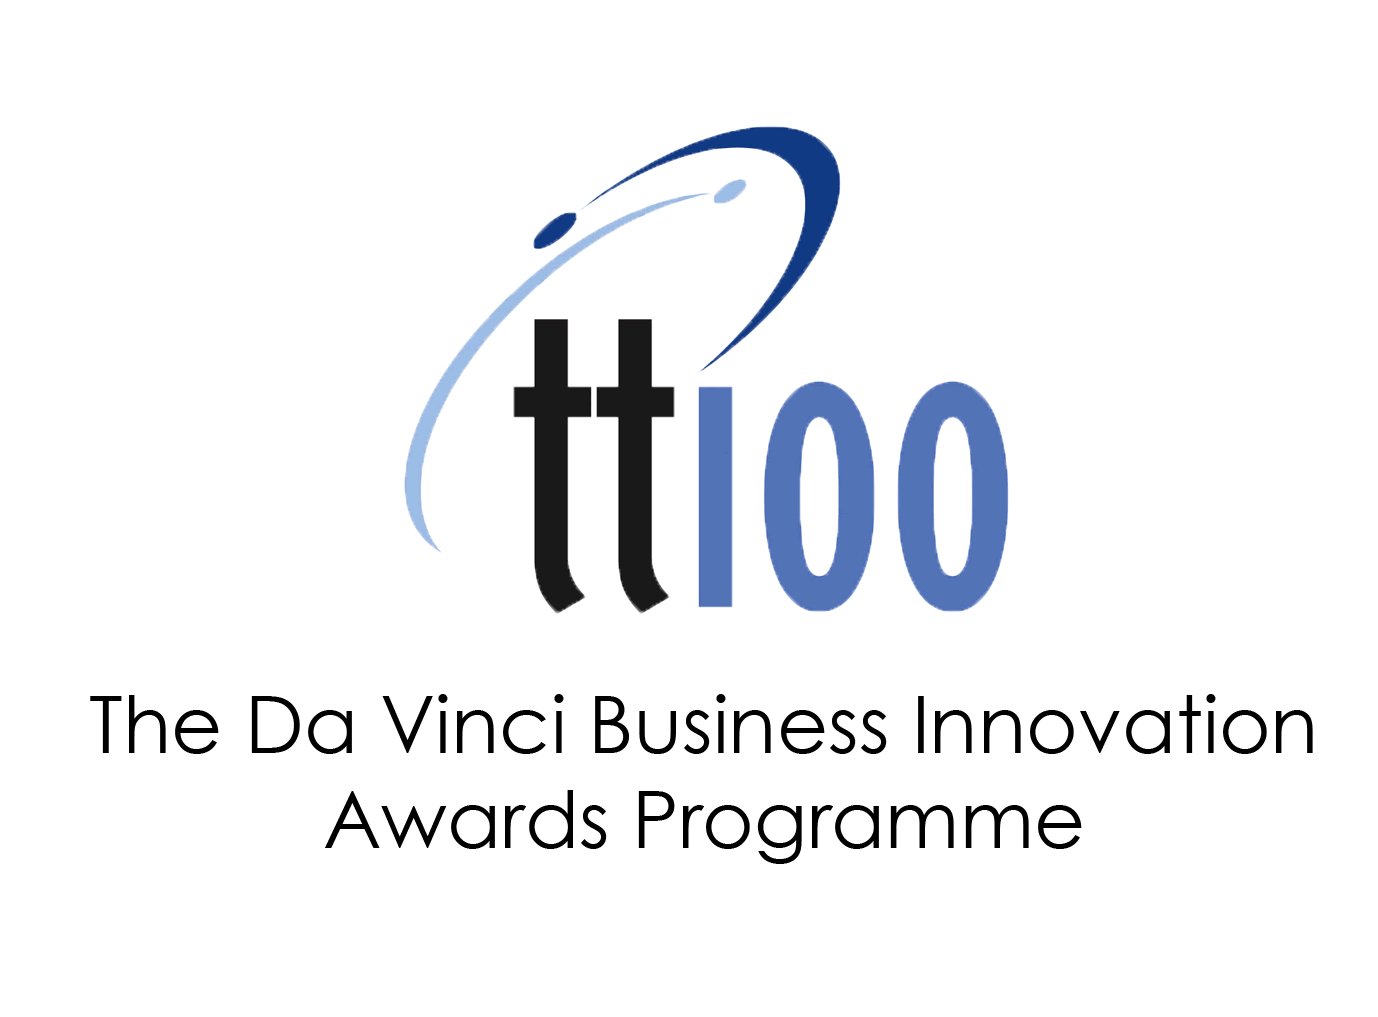 Da Vinci TT100 business innovation award - awarded to hearX Group